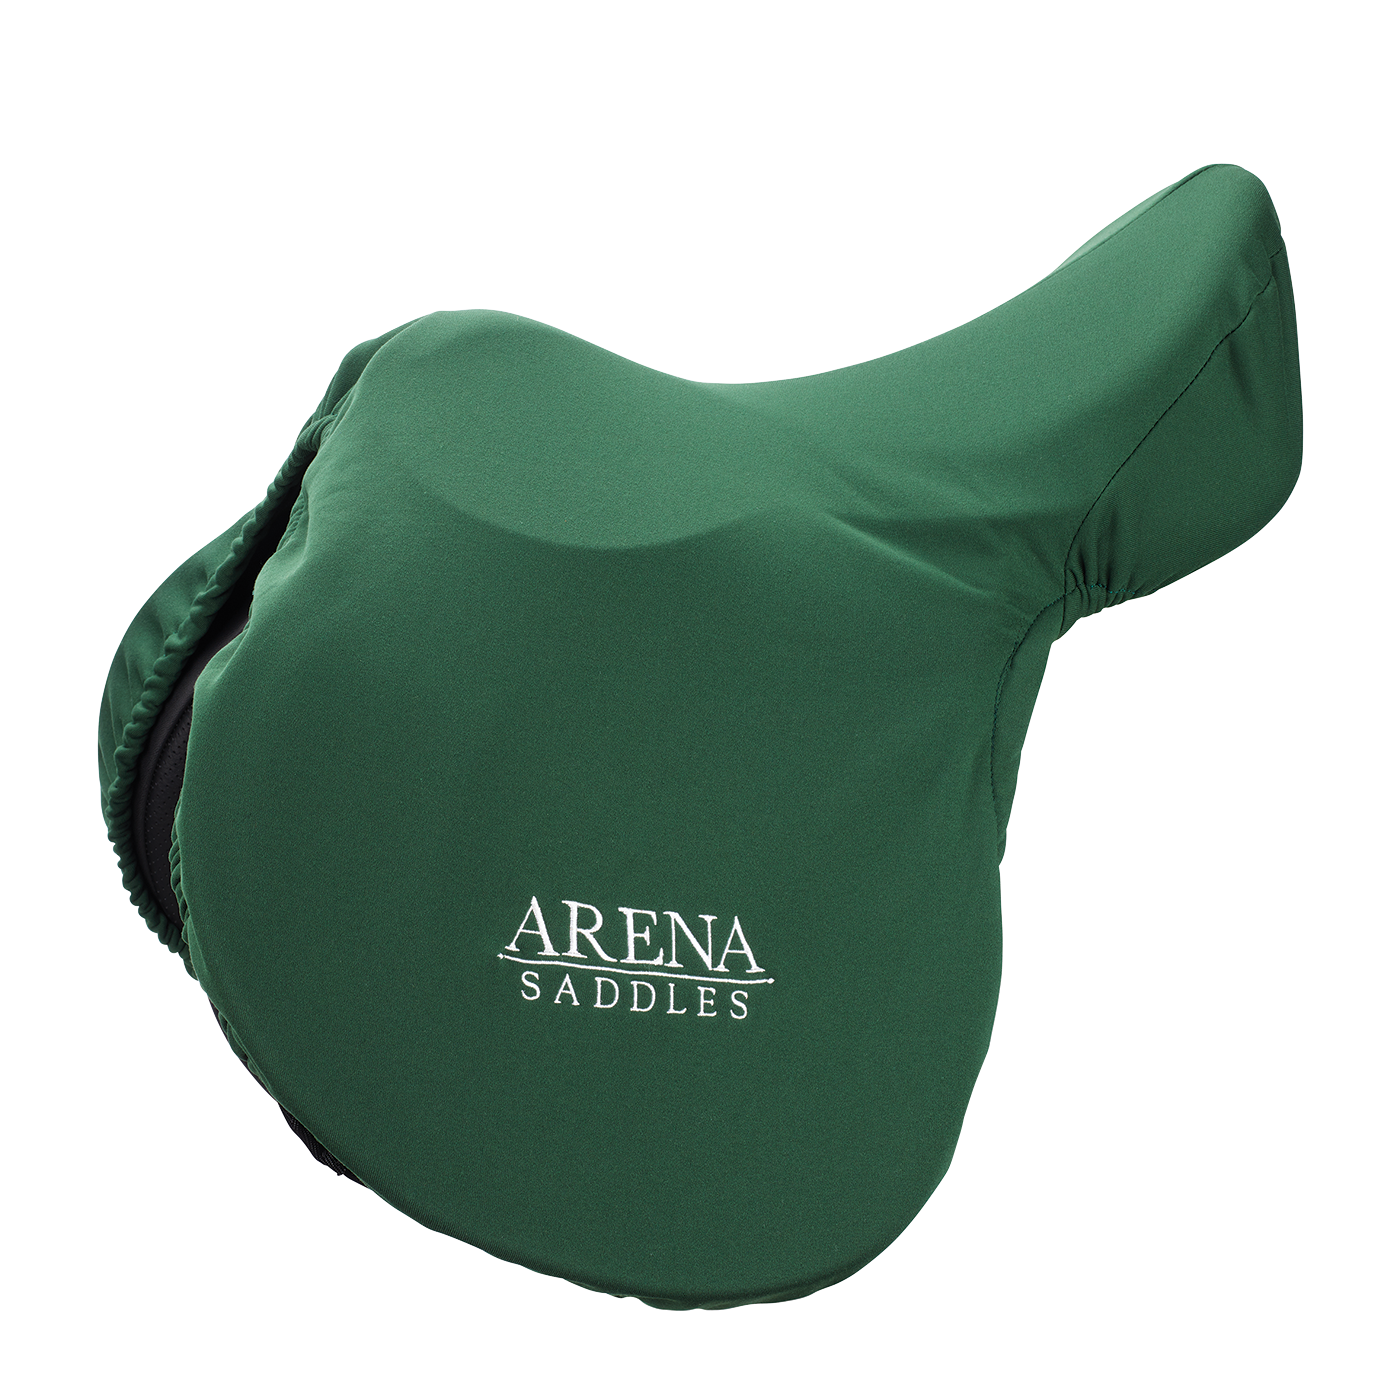 Arena Saddle Cover - 735:42453952200903